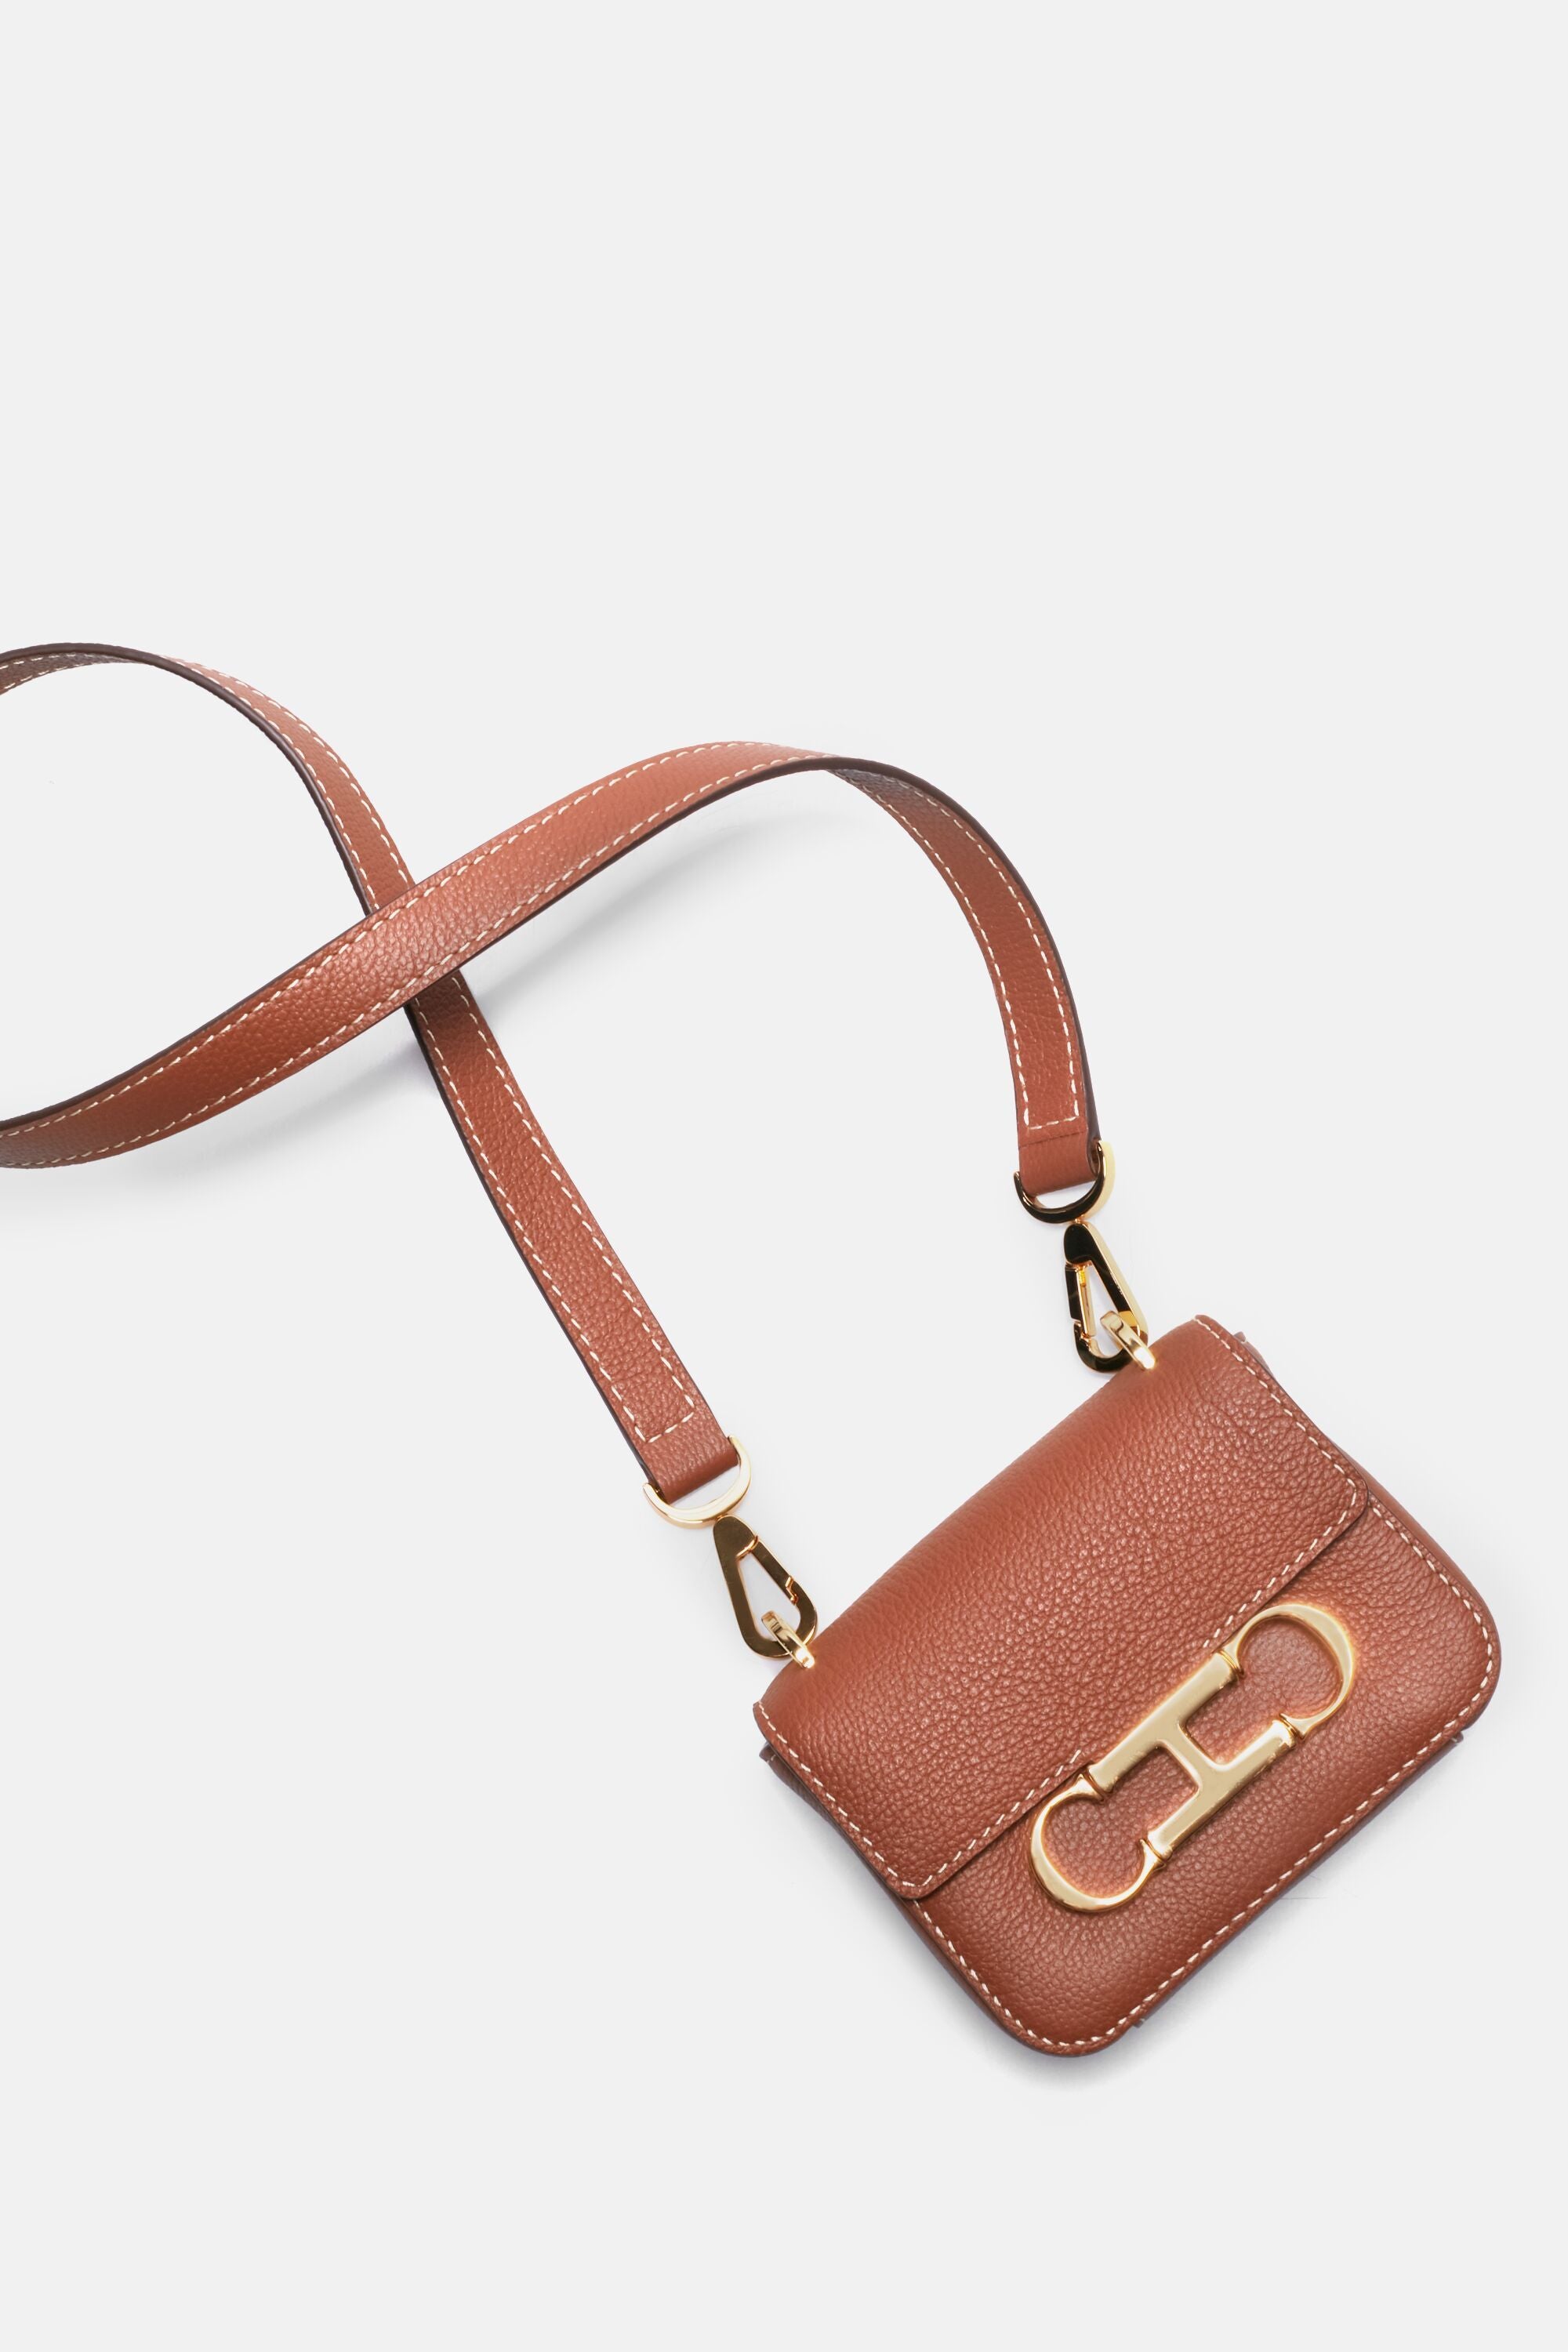 Initials Insignia Micro | Neck wallet brown - CH Carolina Herrera